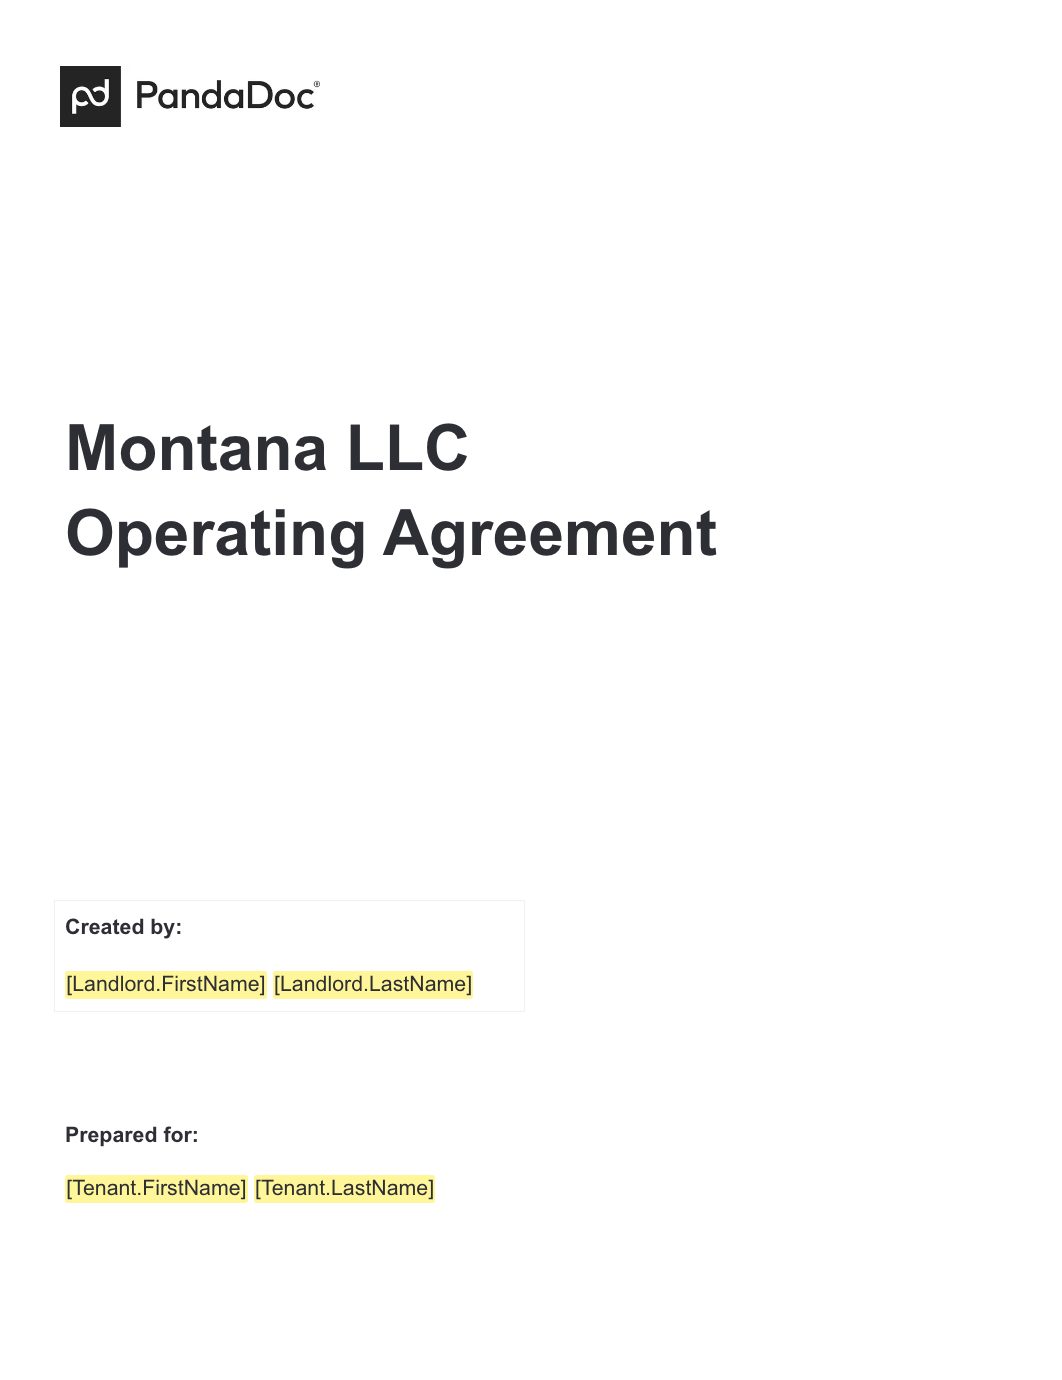 Montana LLC Operating Agreement 